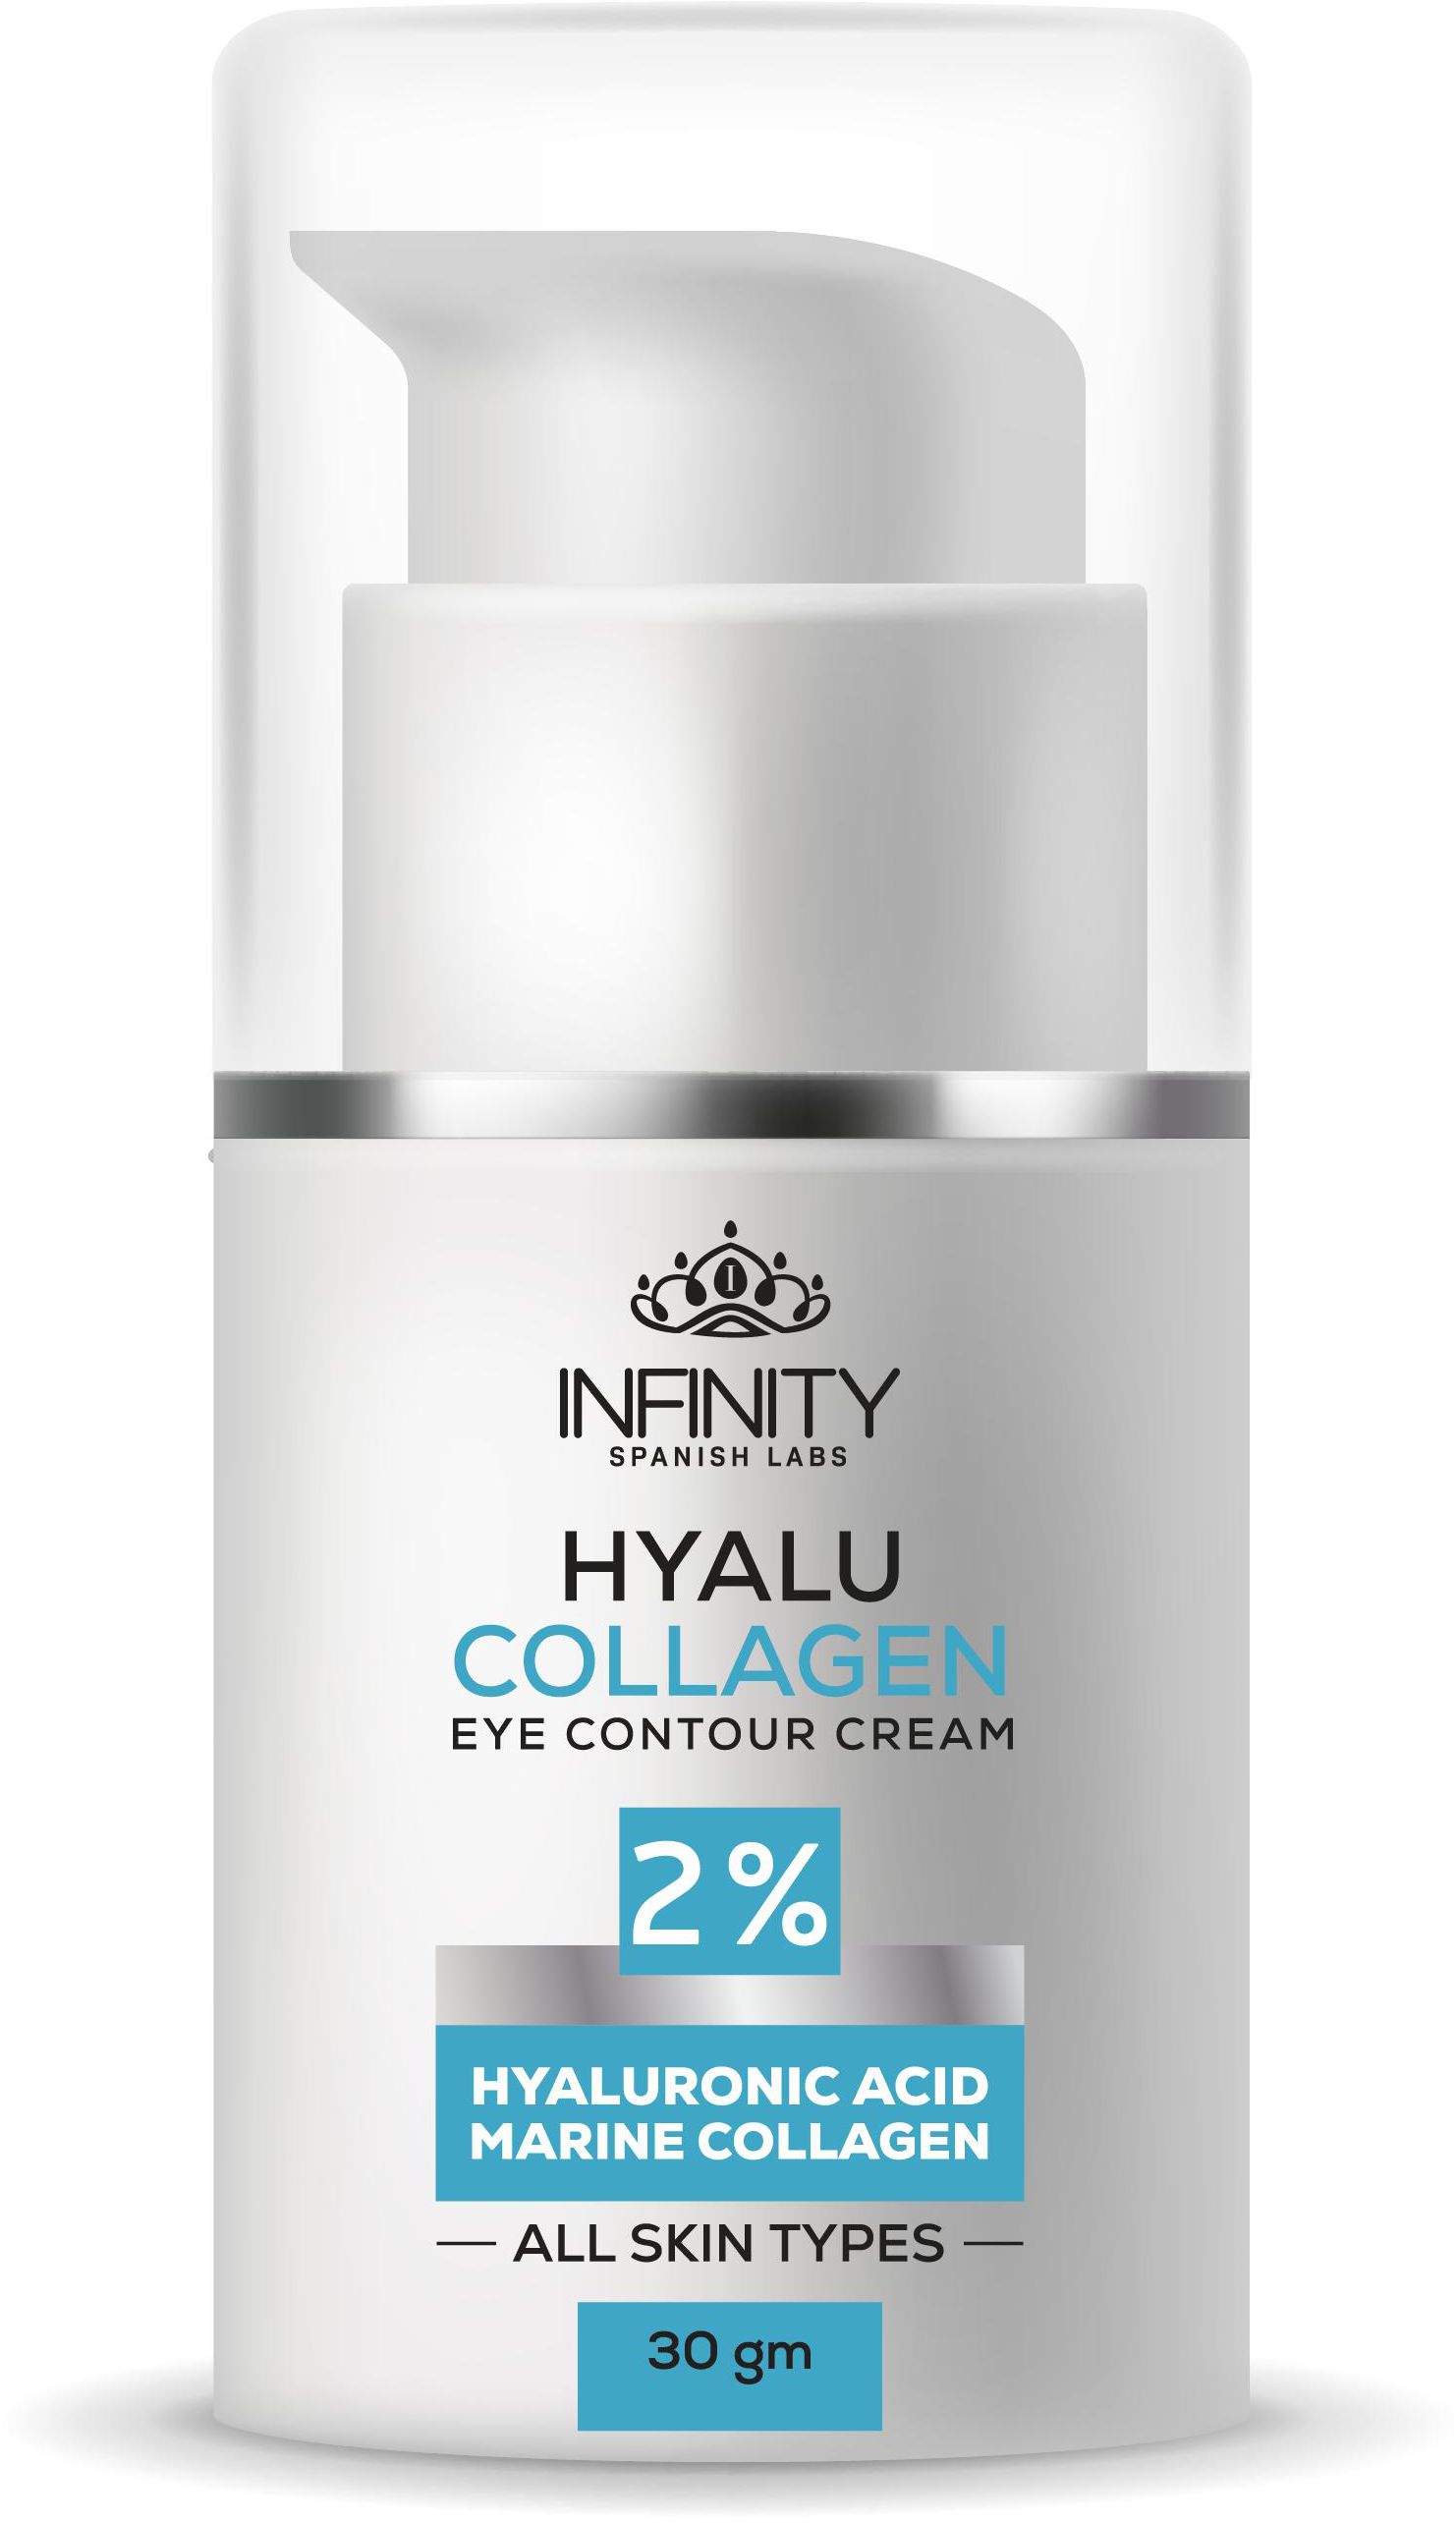 Infinity Hyalu Collagen eye contour cream